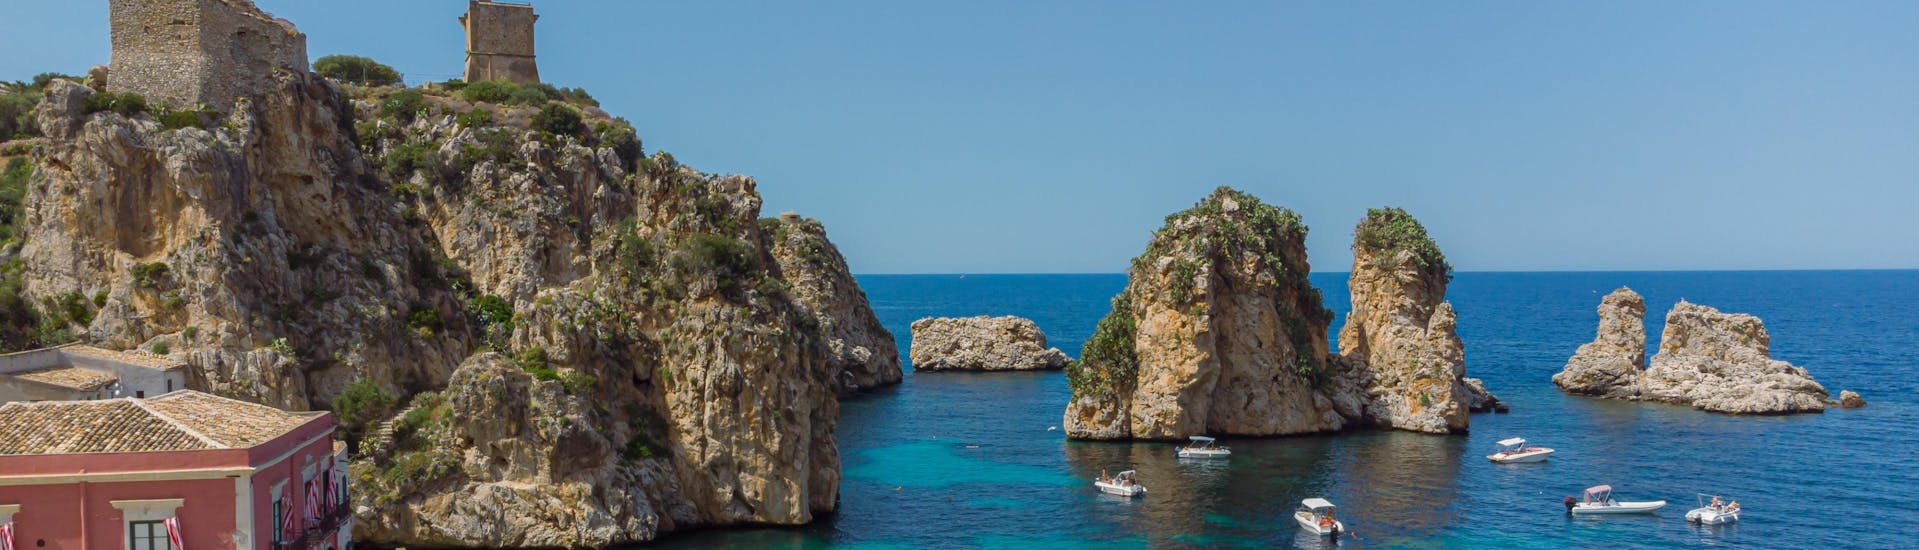 A wonderful view of the Faraglioni of Scopello, a popular destination for boat trips in Sicily.